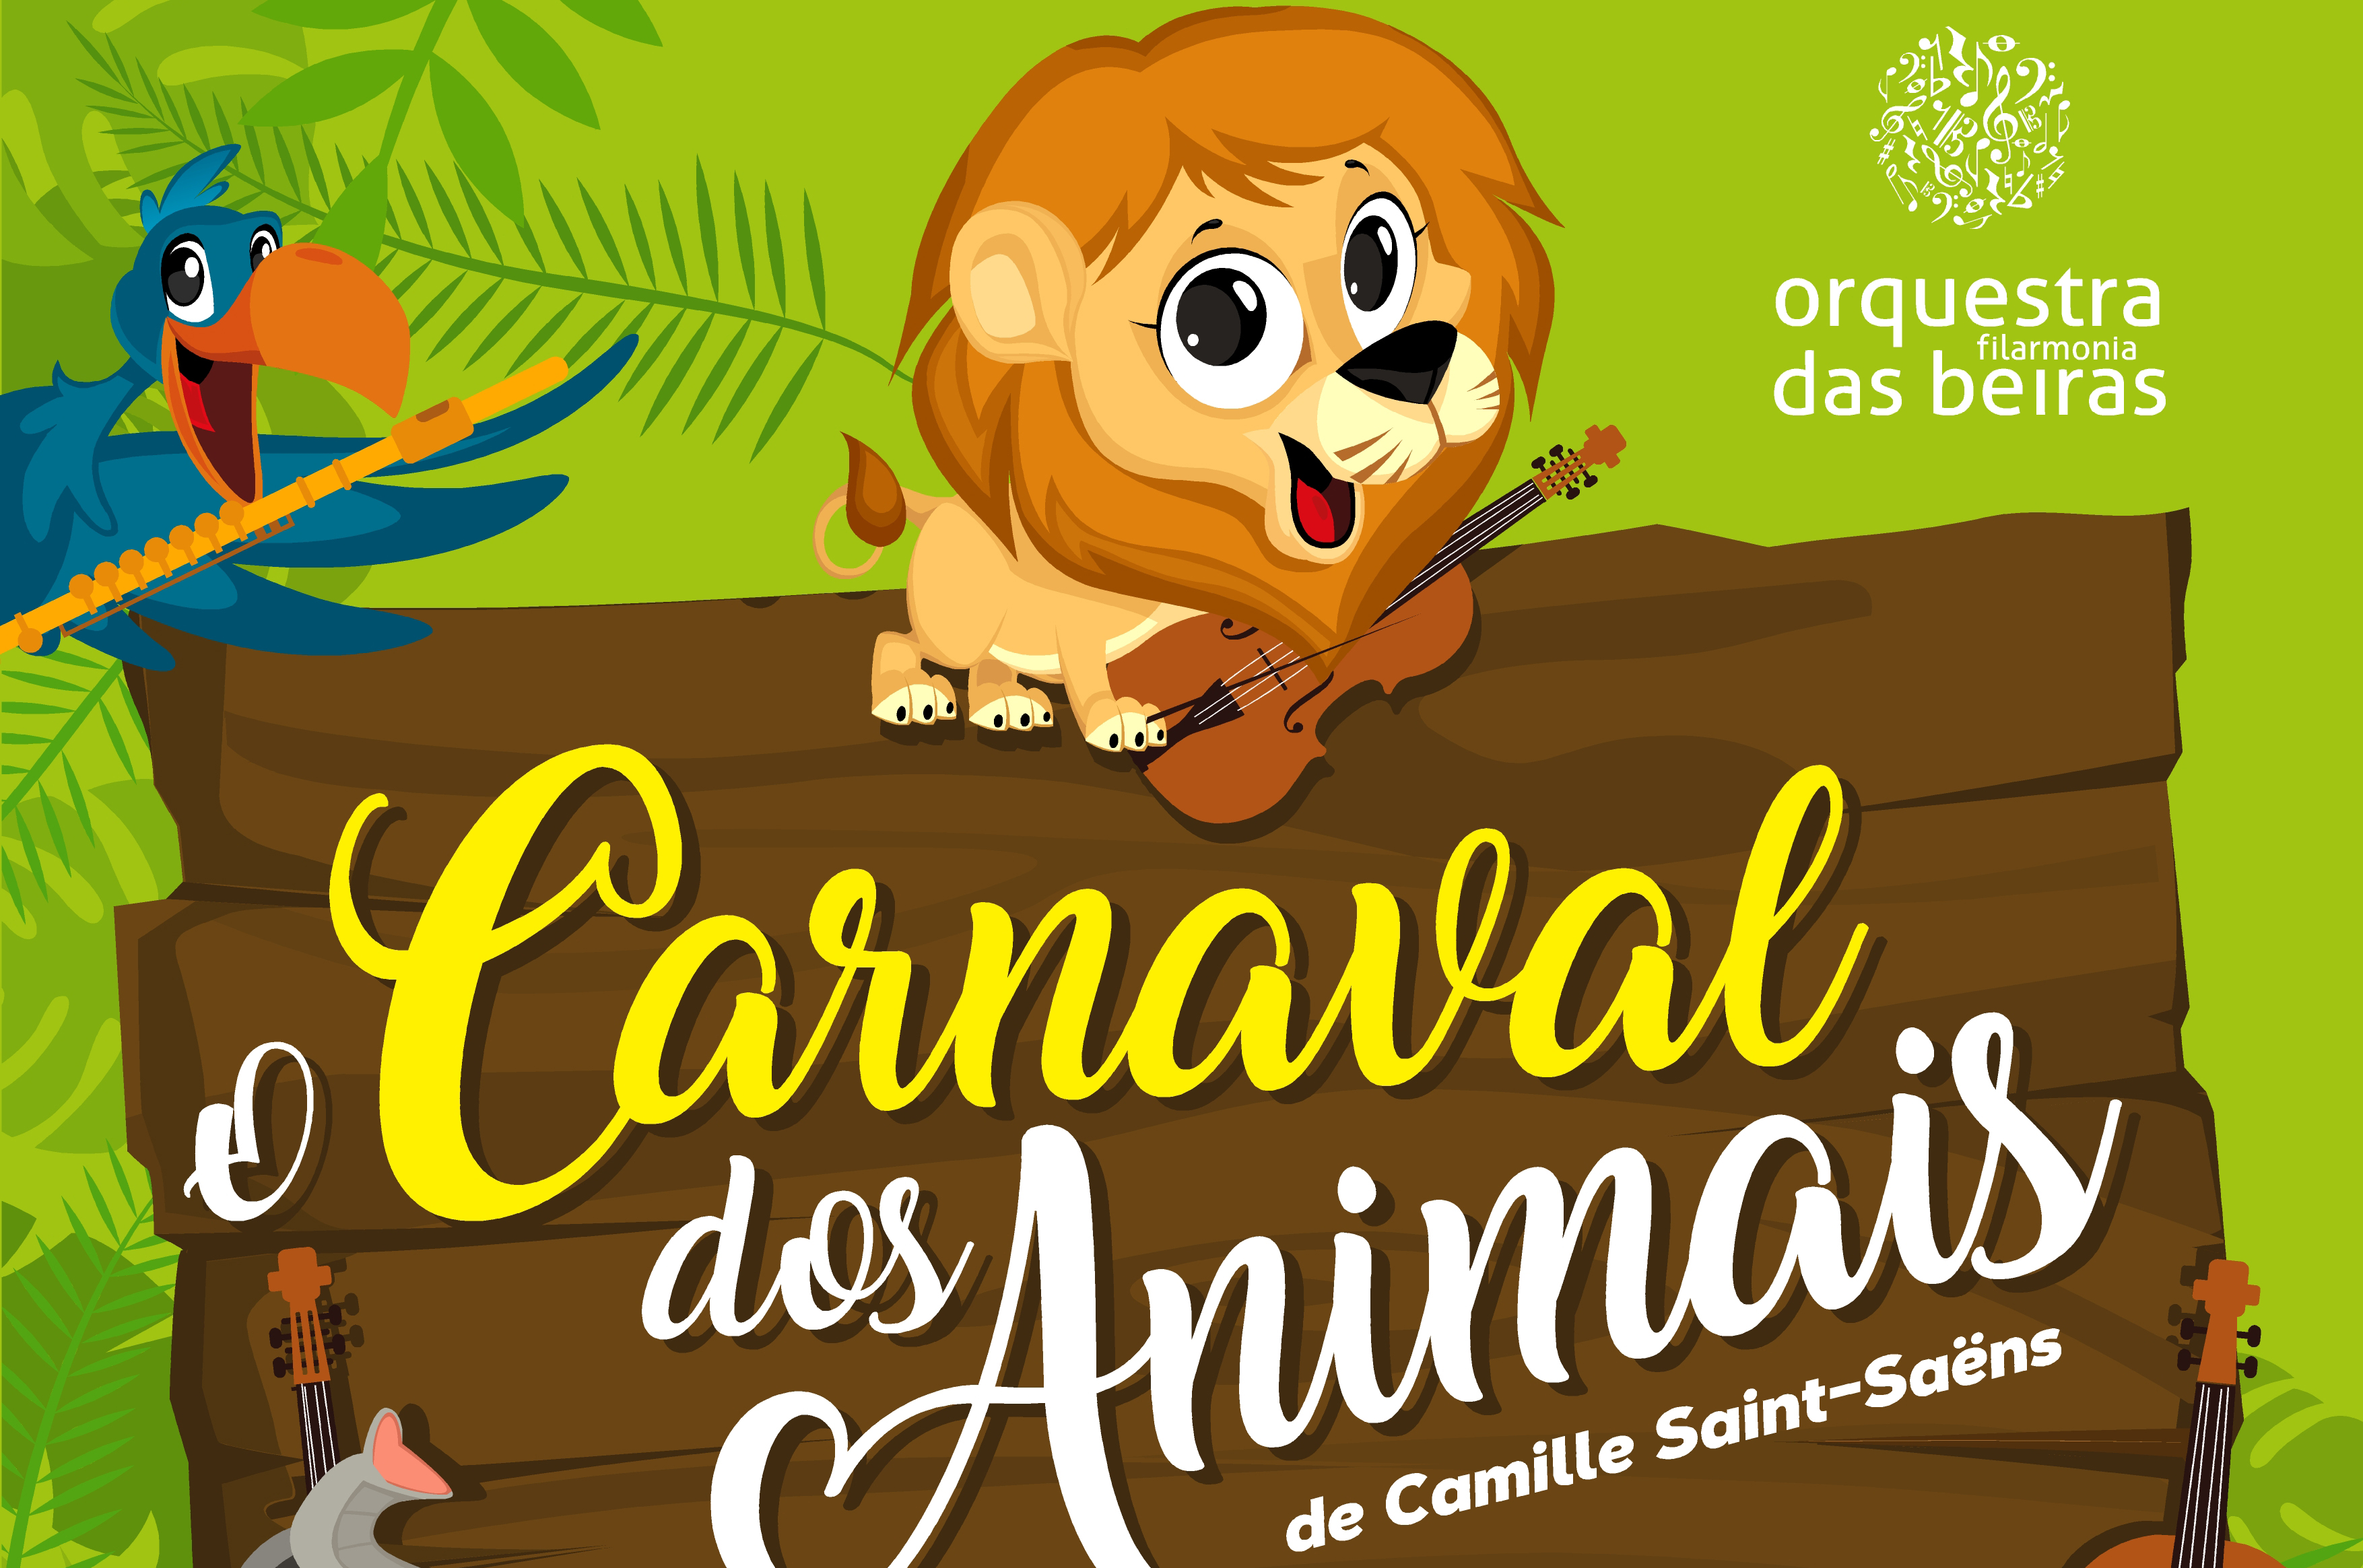 O Carnaval dos Animais- Camille Saint-Saëns